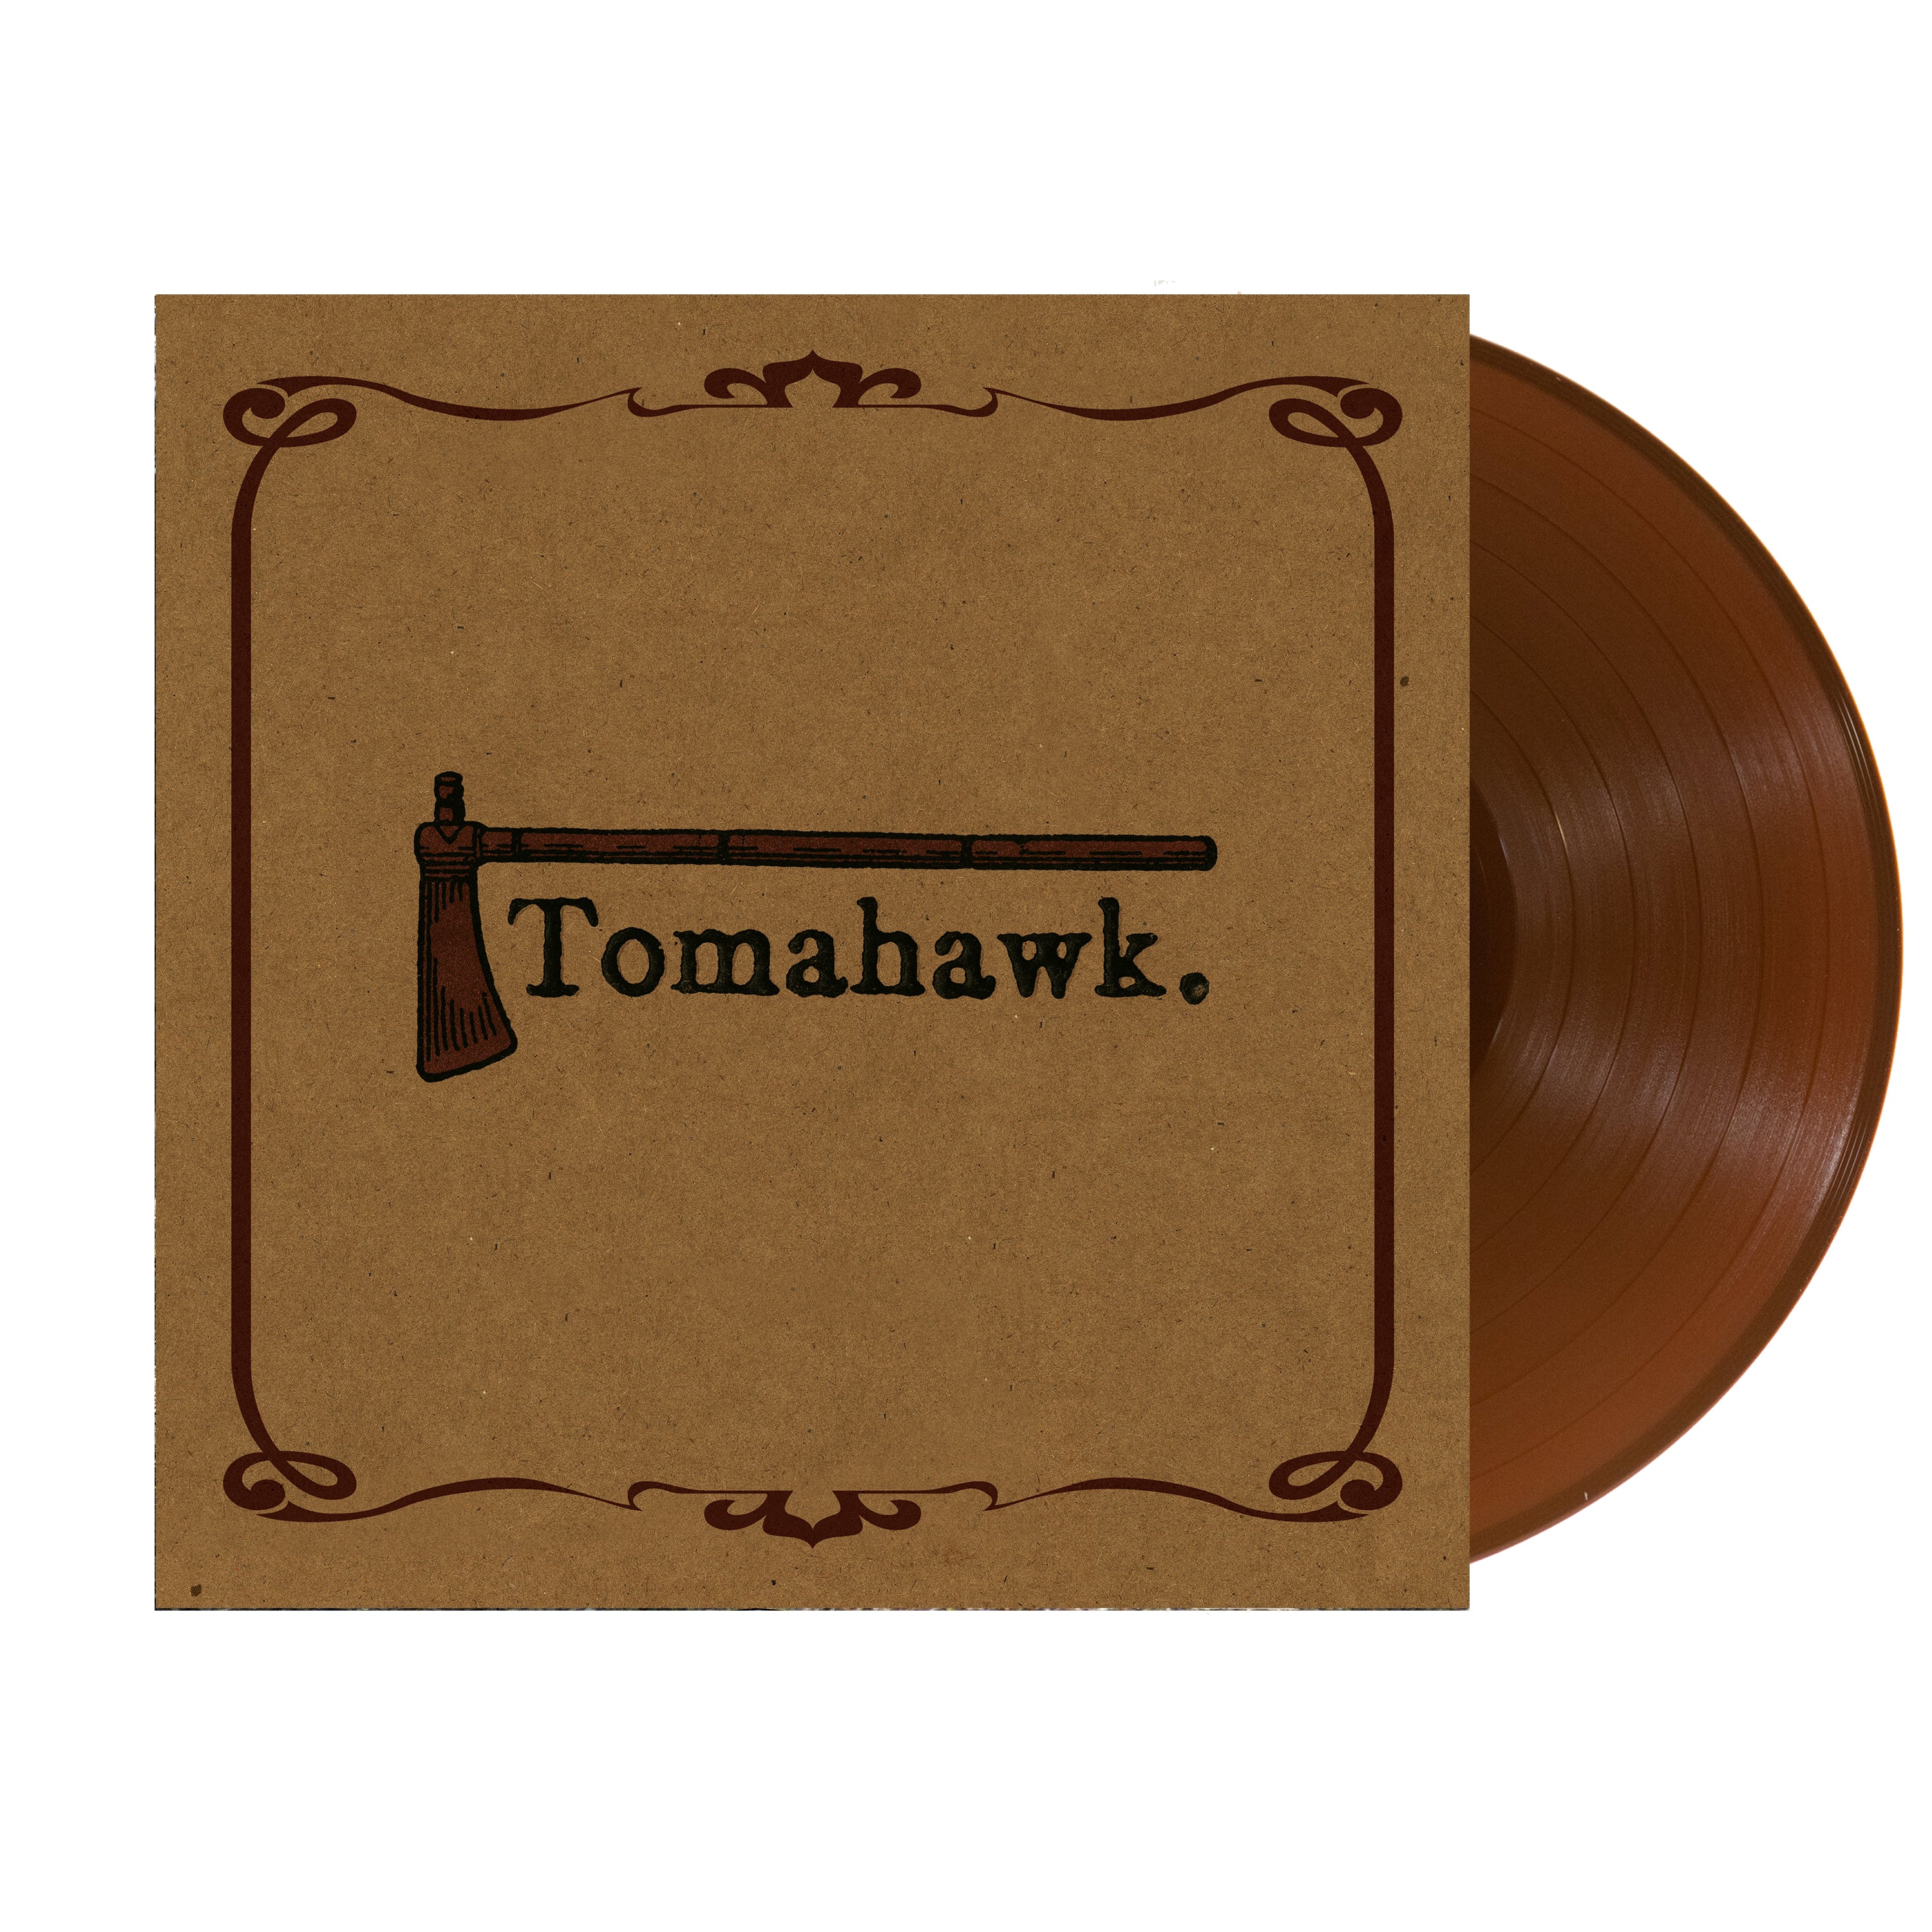 Tomahawk - Tomahawk: Limited Edition Opaque Brown Vinyl LP